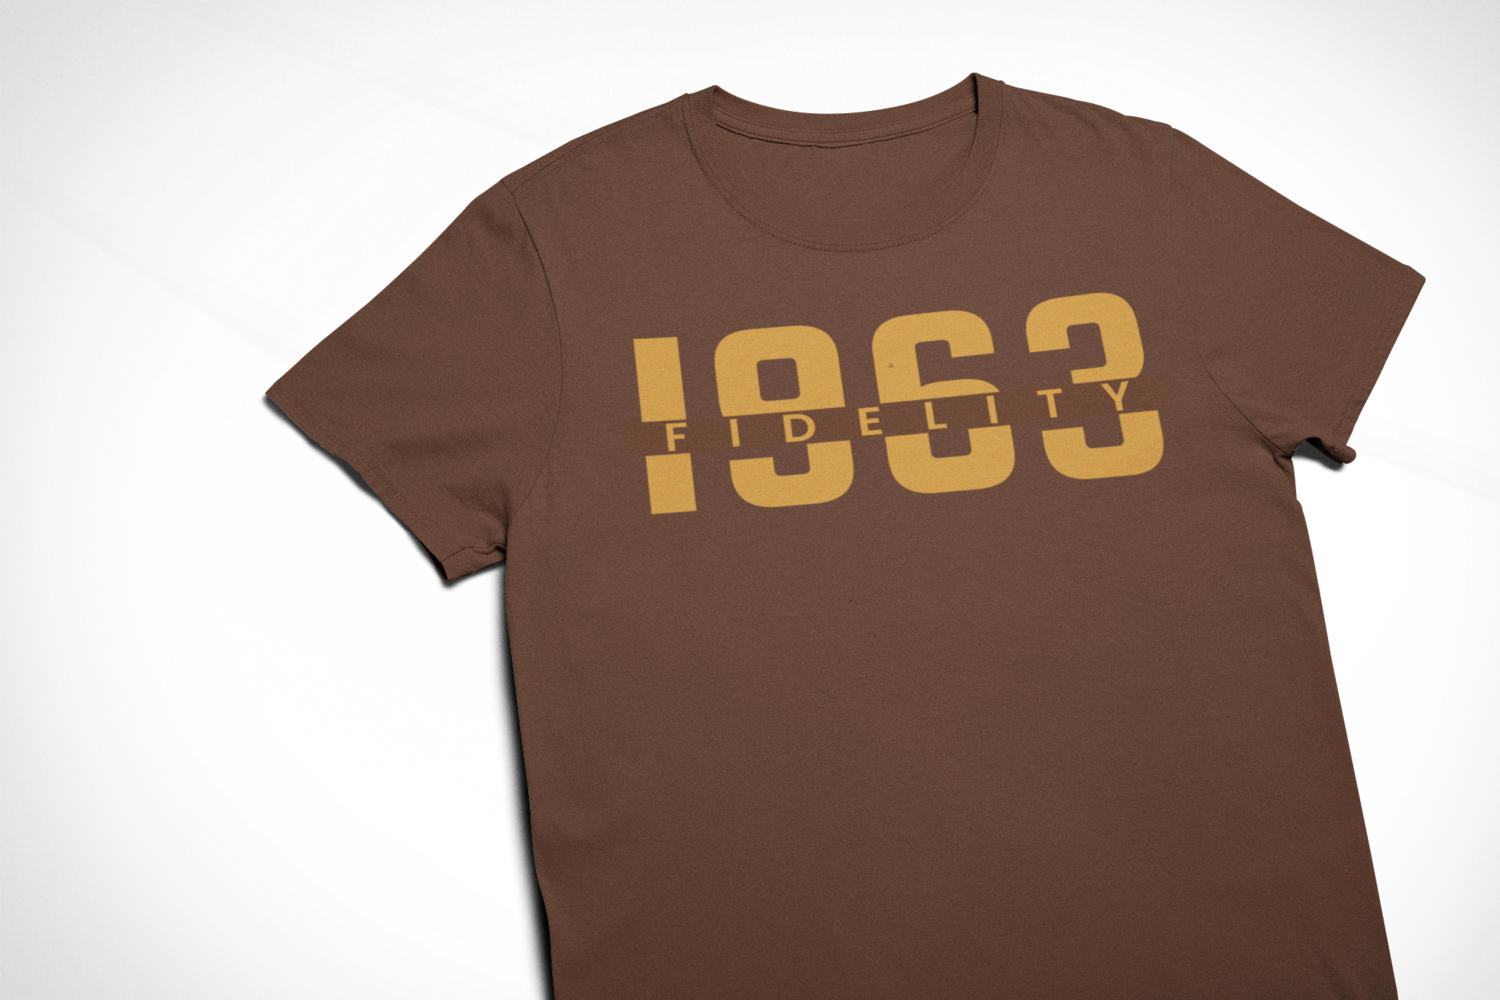 Iota 1963 Fidelity Value T-Shirt by Afflatus